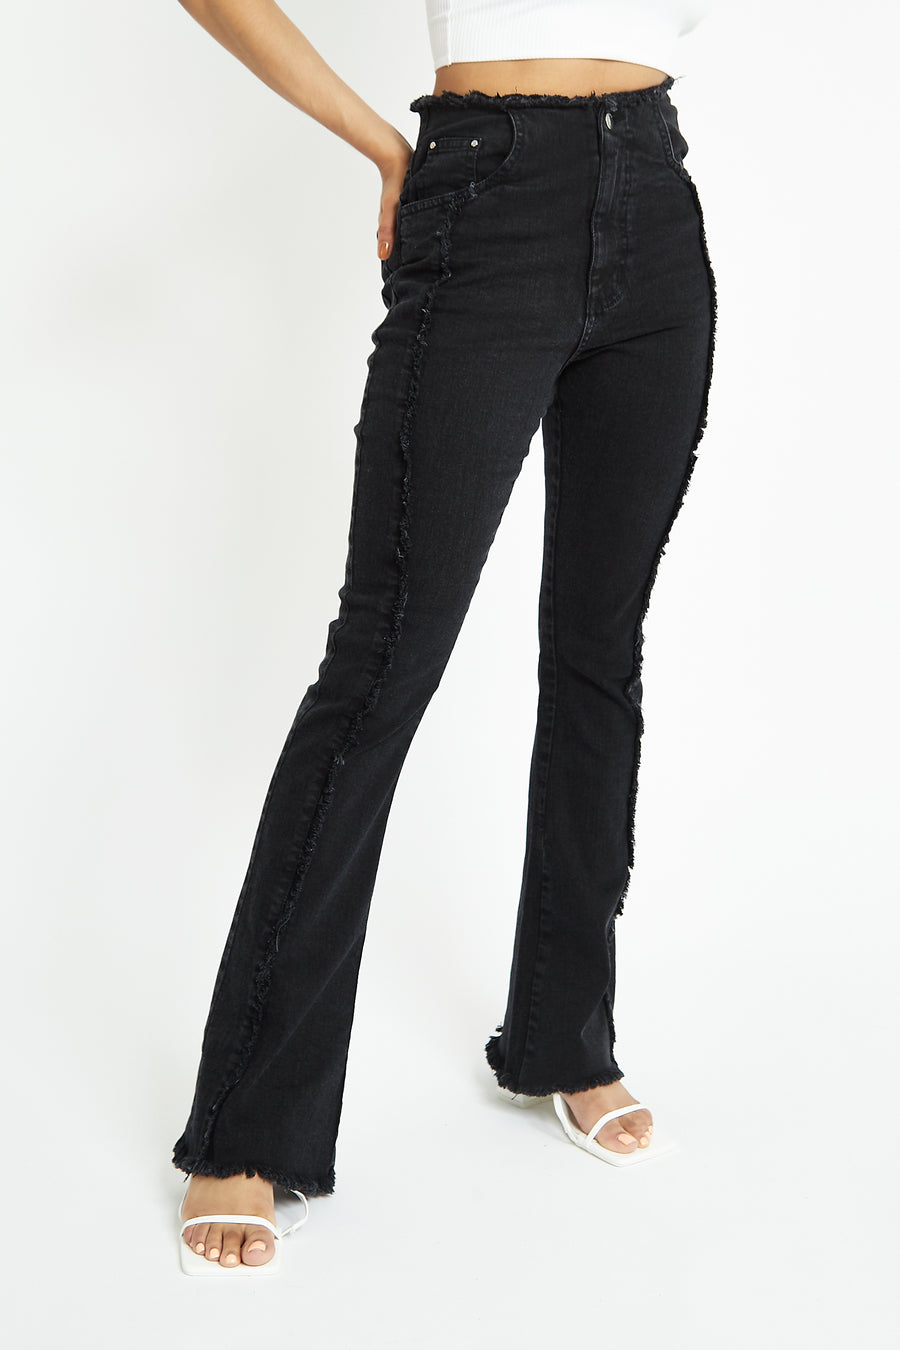 Black Frayed Flare Jeans